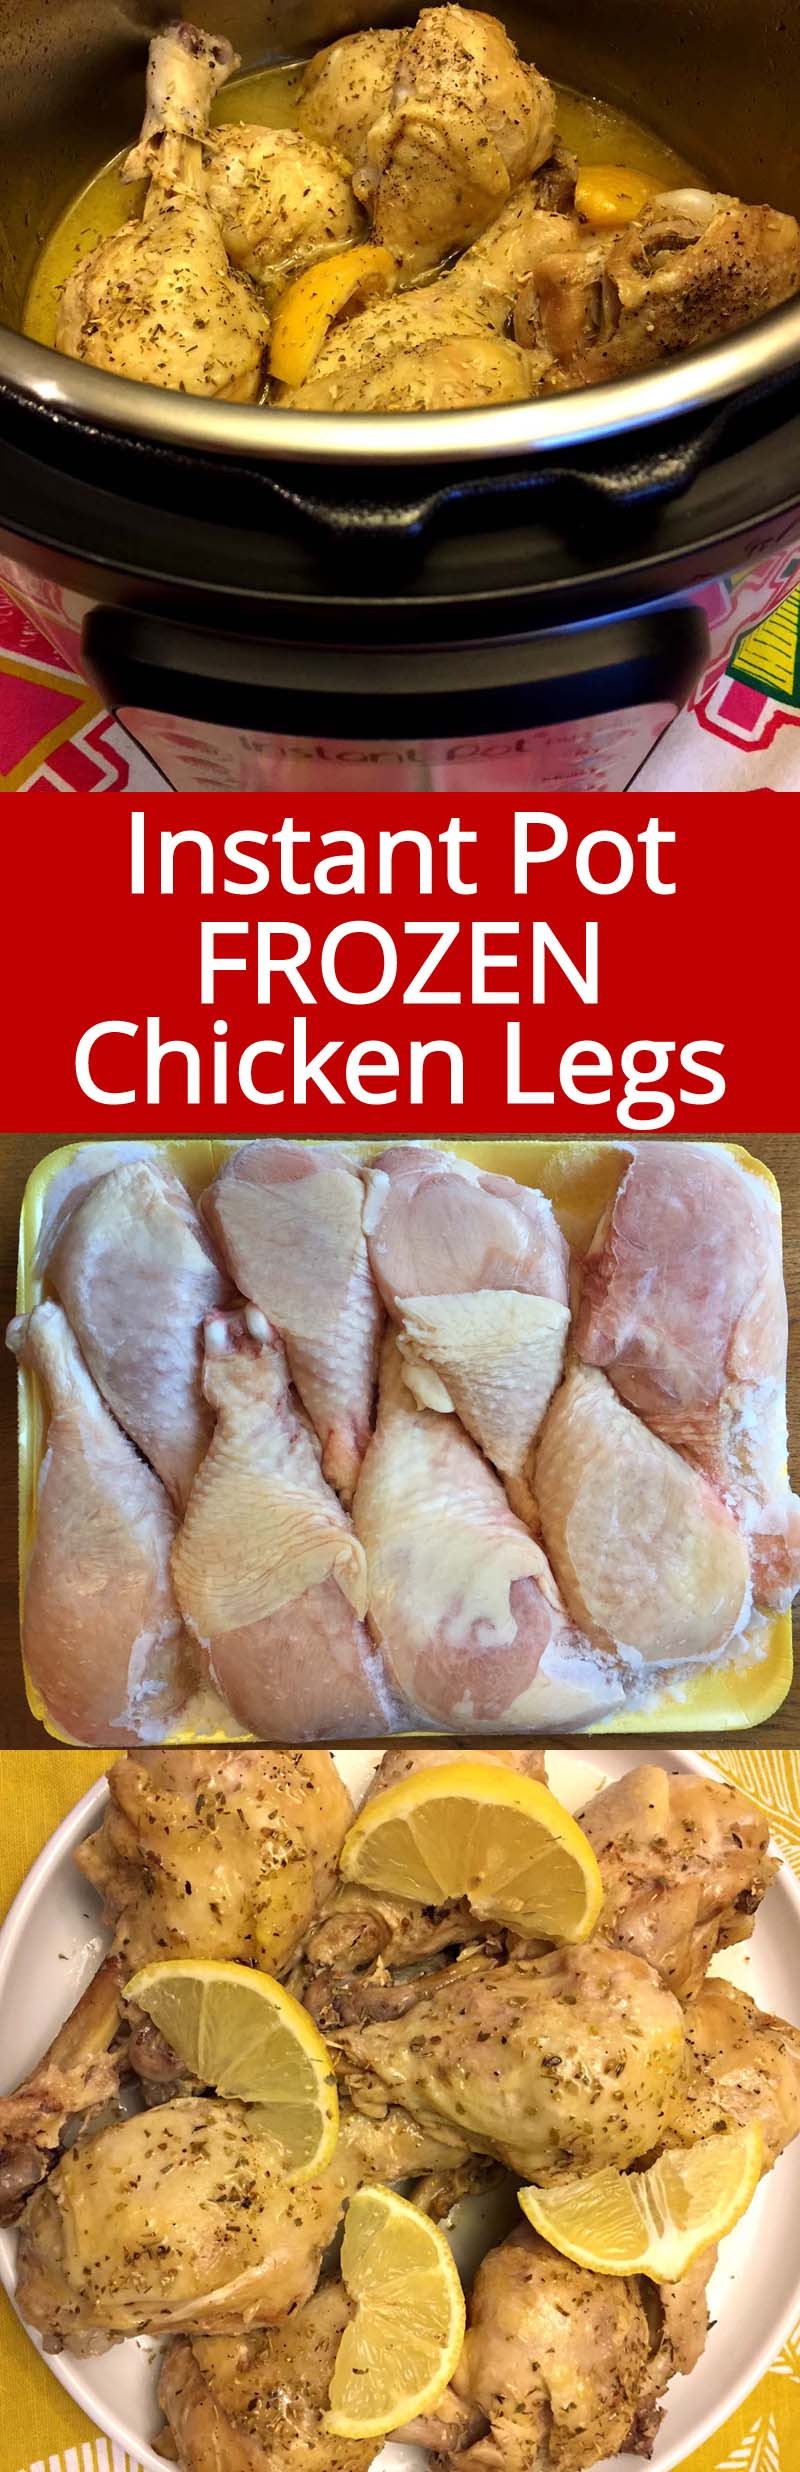 Instant Pot Frozen Chicken Recipes
 Instant Pot Frozen Chicken Legs With Lemon And Garlic